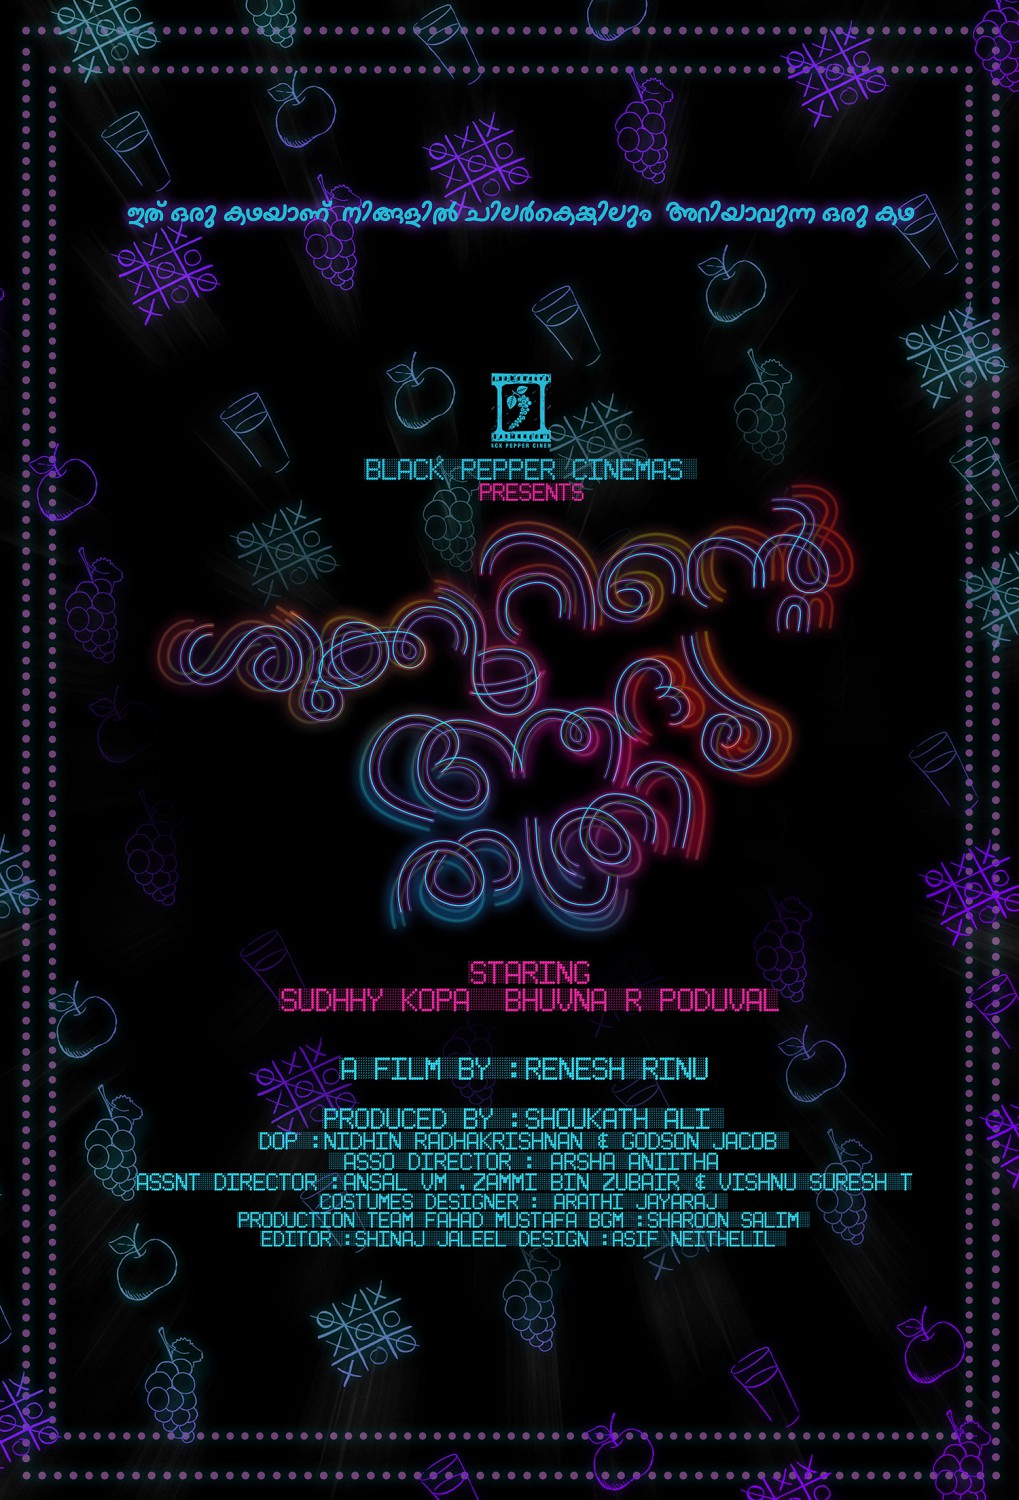 Extra Large Movie Poster Image for Shukkoorinte Adyarathri